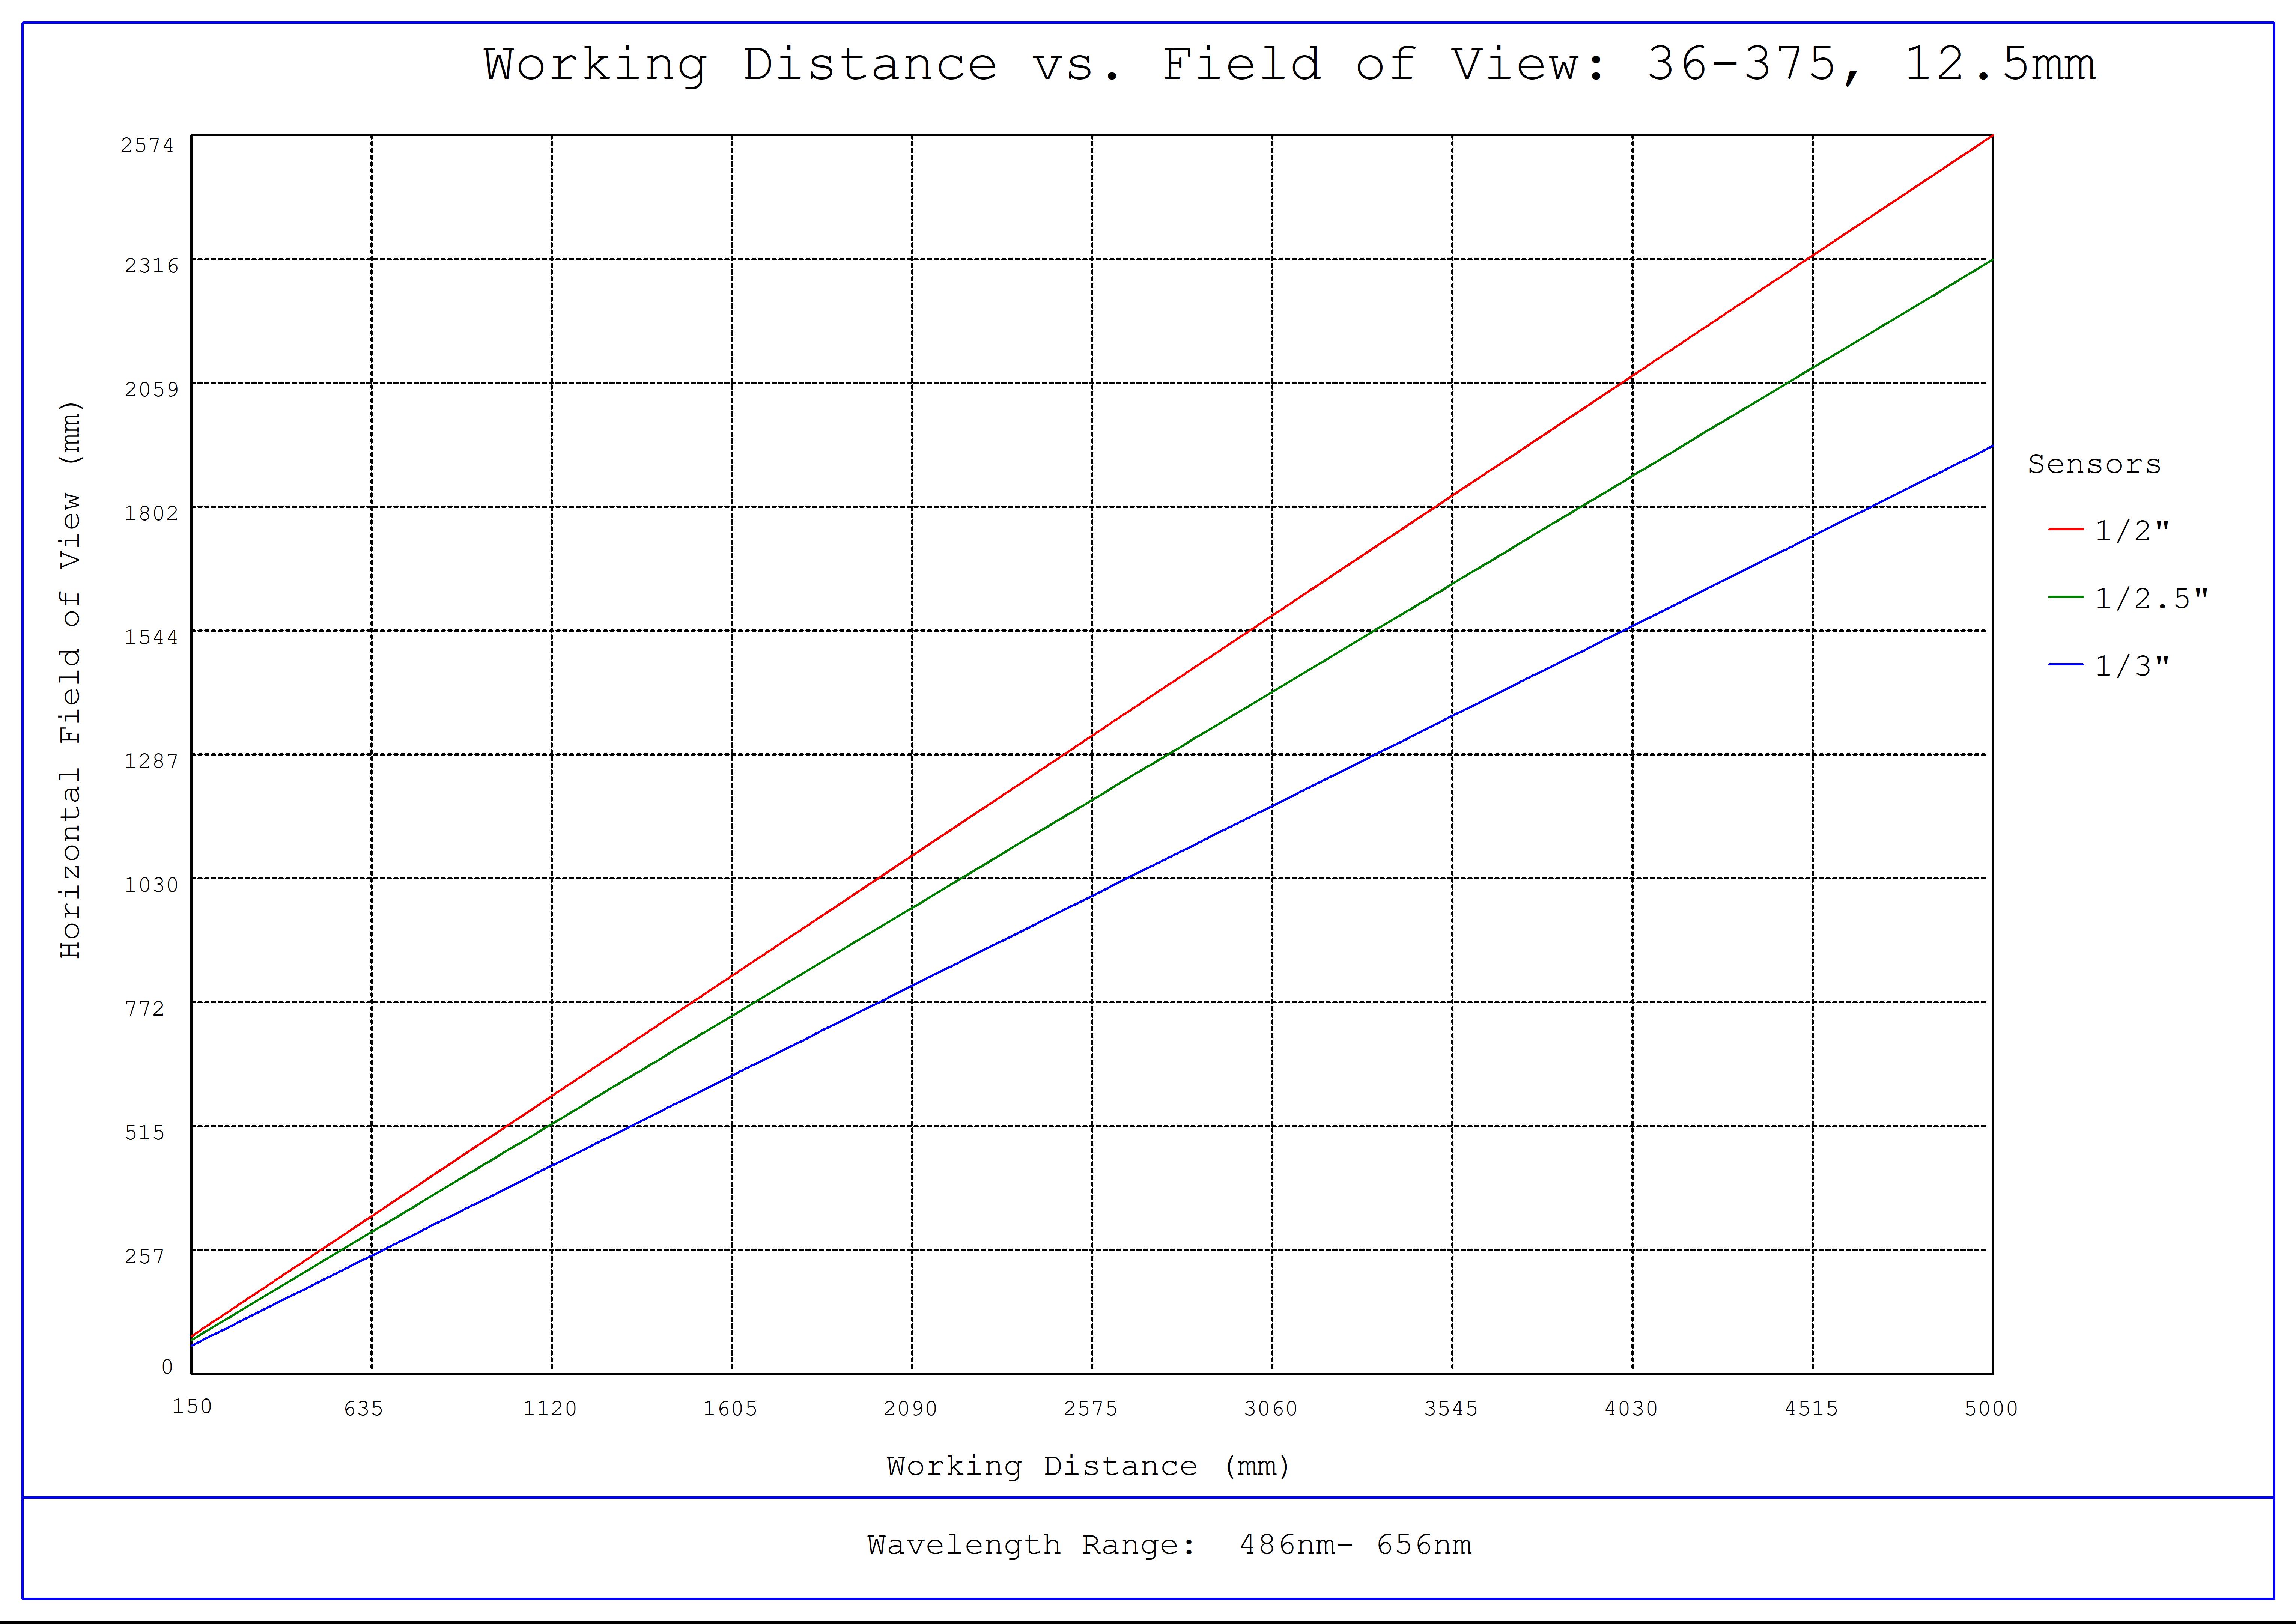 #36-375, 12.5mm FL f/8, Rugged Blue Series M12 Lens, Working Distance versus Field of View Plot